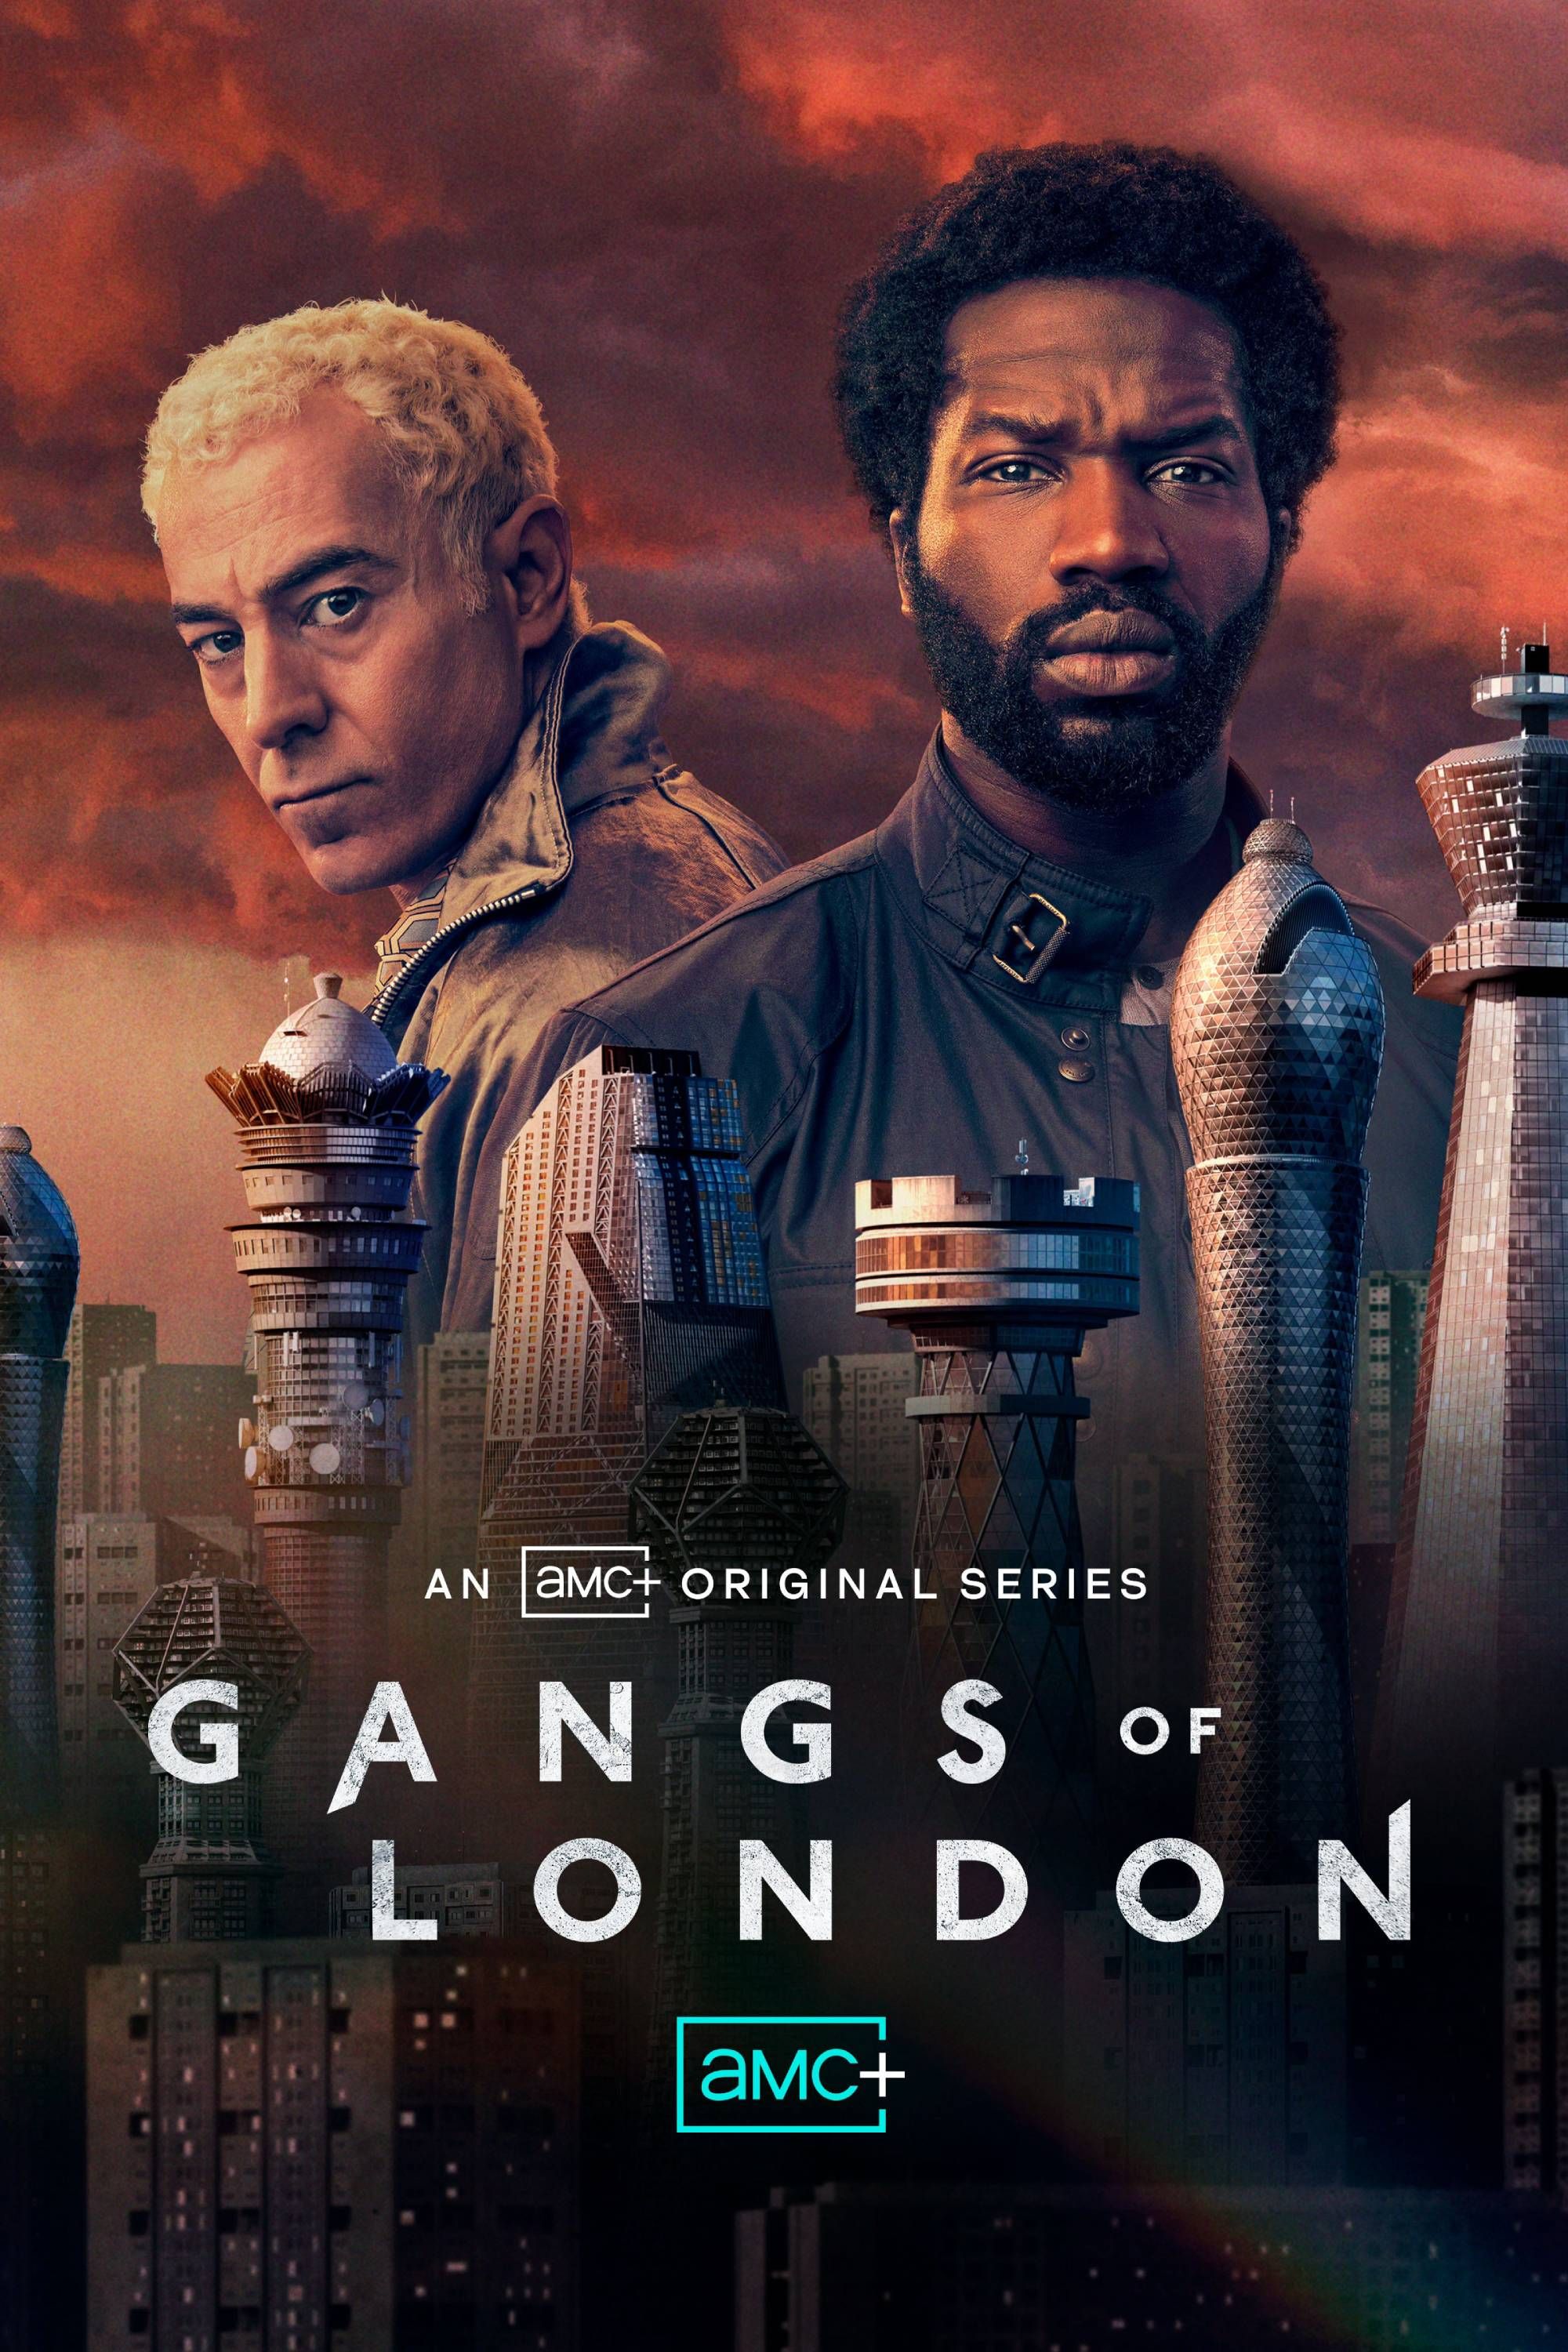 gangs of london poster